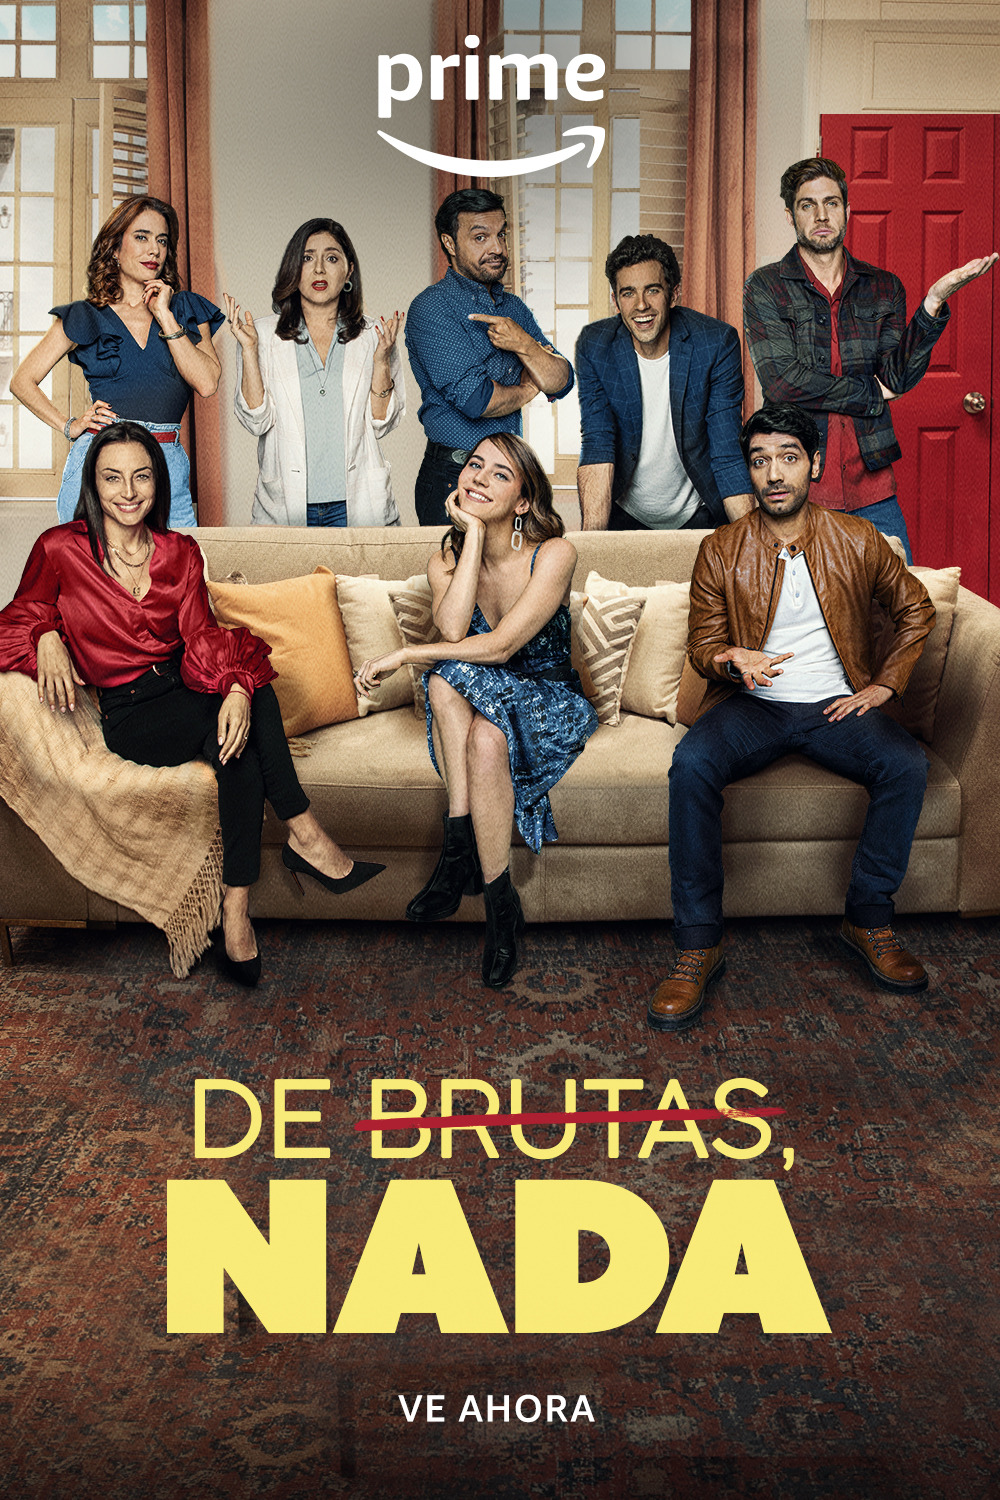 Extra Large TV Poster Image for De Brutas, Nada (#22 of 22)